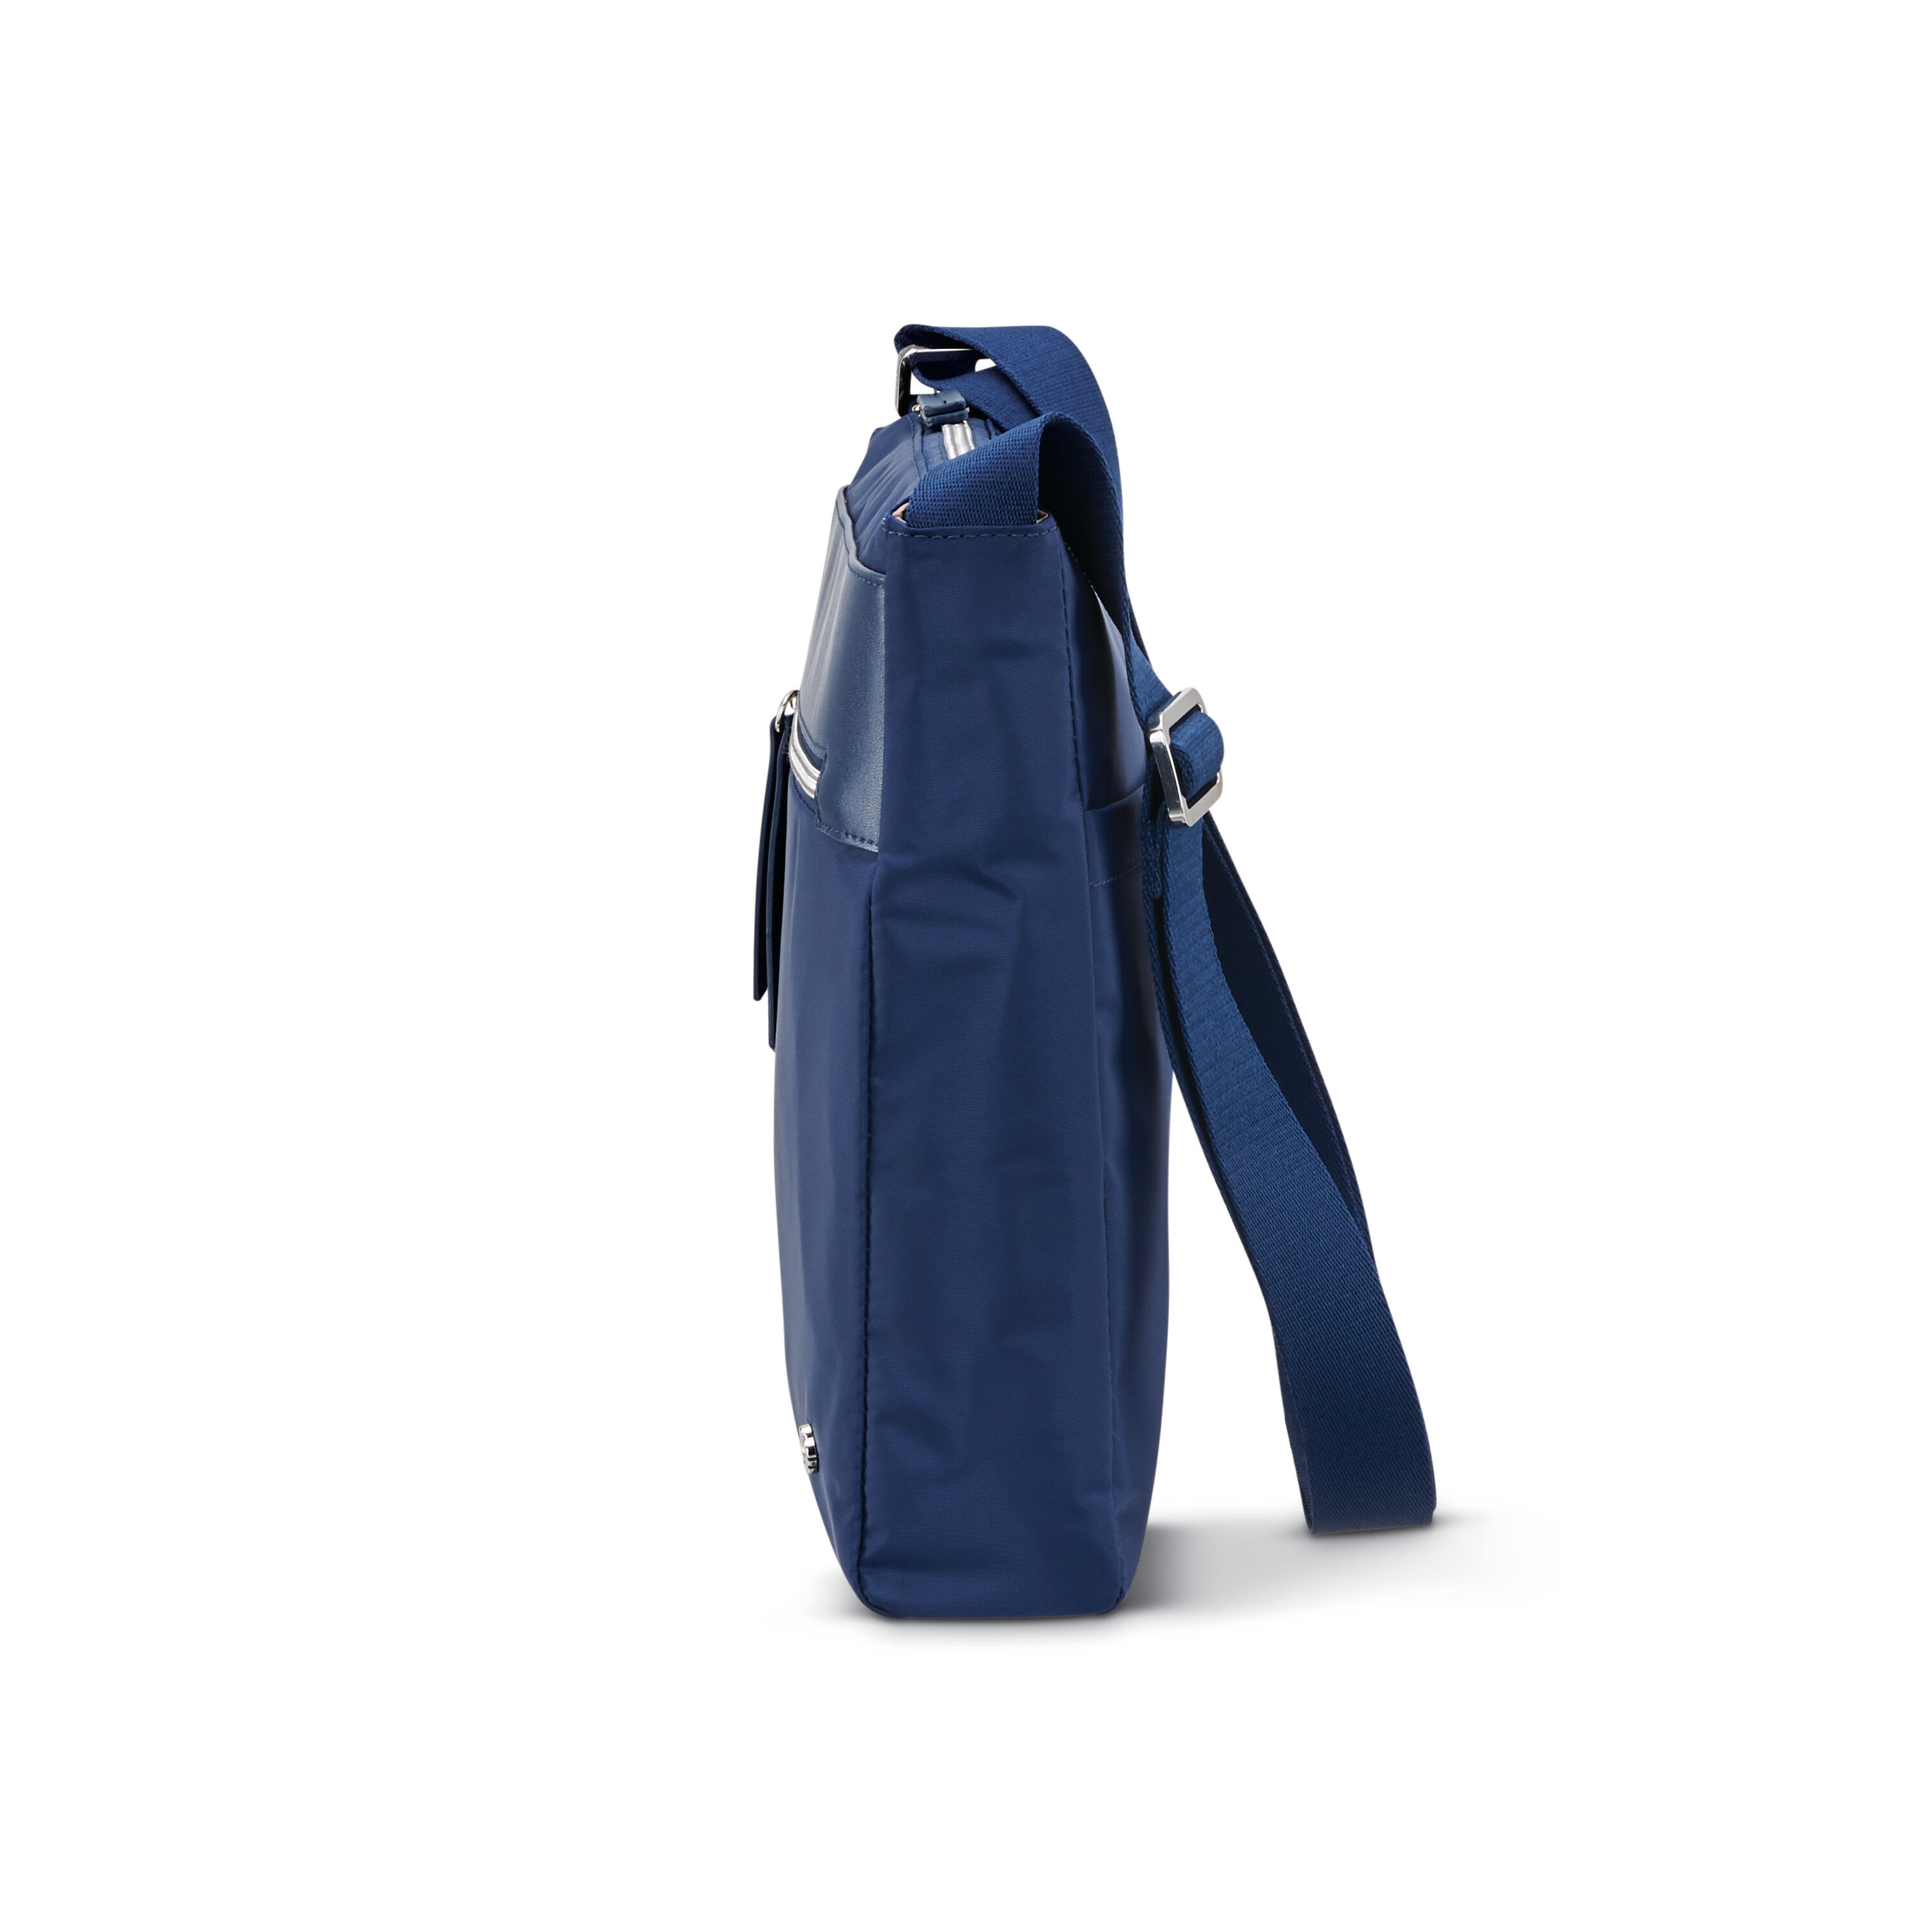 Amazon.com: Purse Strap Adjustable Bag Strap Crossbody Straps for Purses  Gunblack Clasps Bag Straps Replacement Crossbody Purse Straps for Handbags  Navy Blue